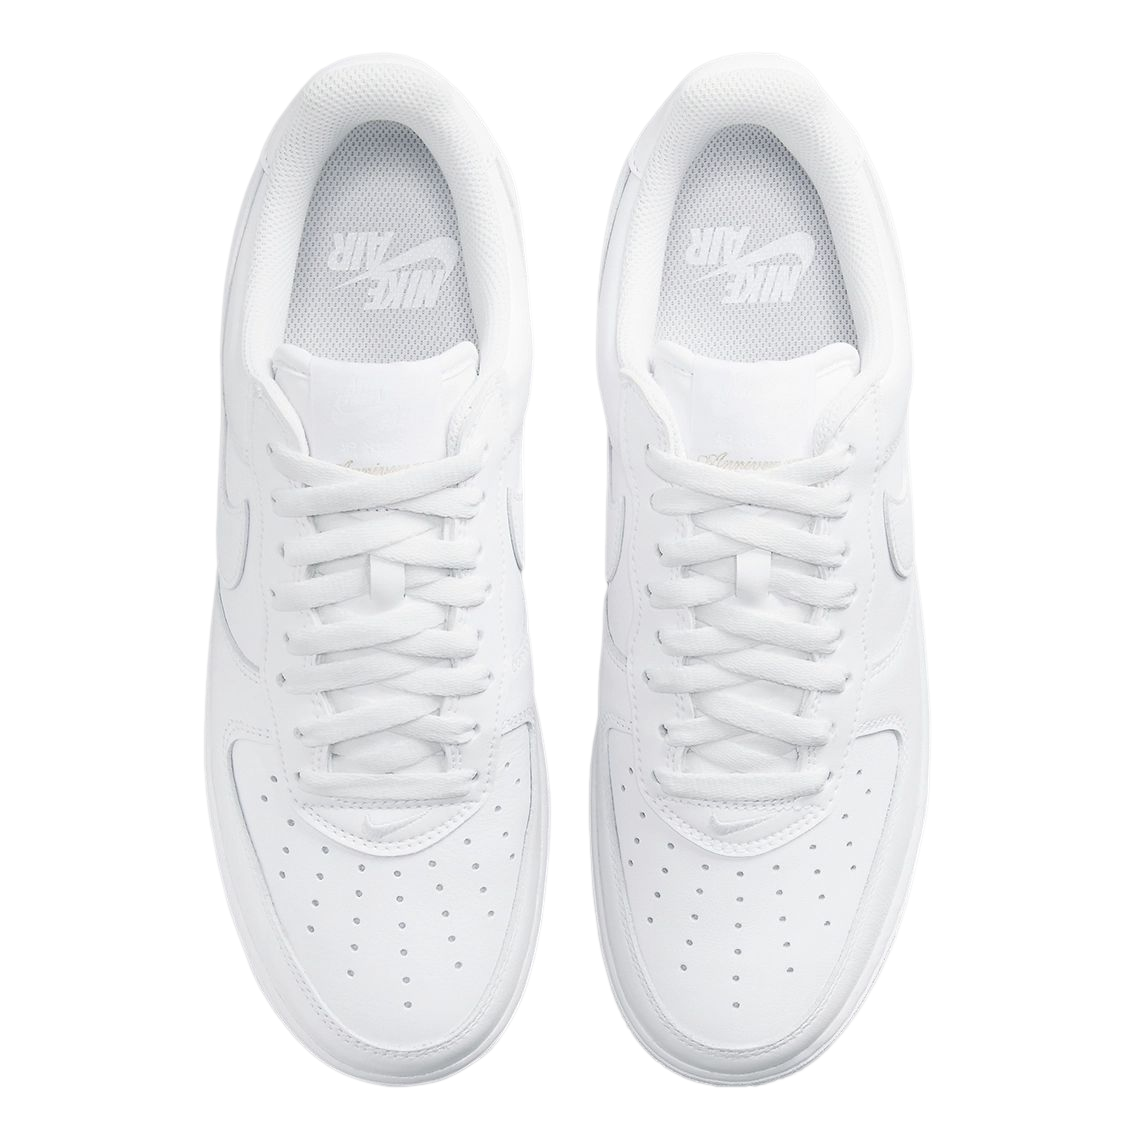 Nike Air Force 1 Anniversary Edition Triple White DJ3911-100